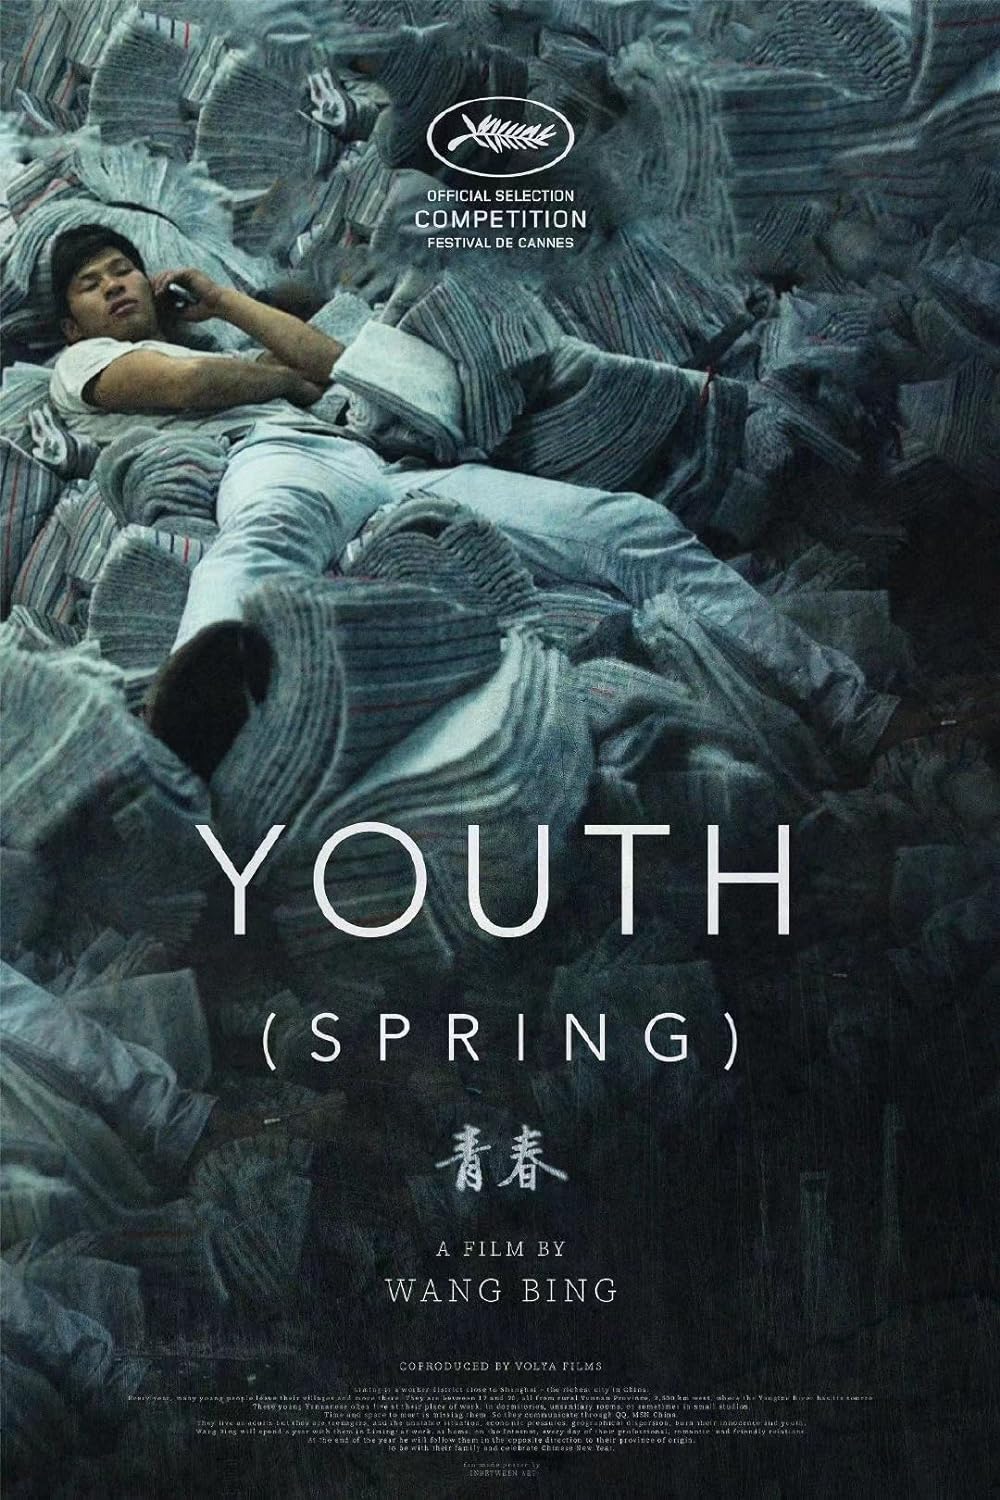 Youth (Spring) packshot